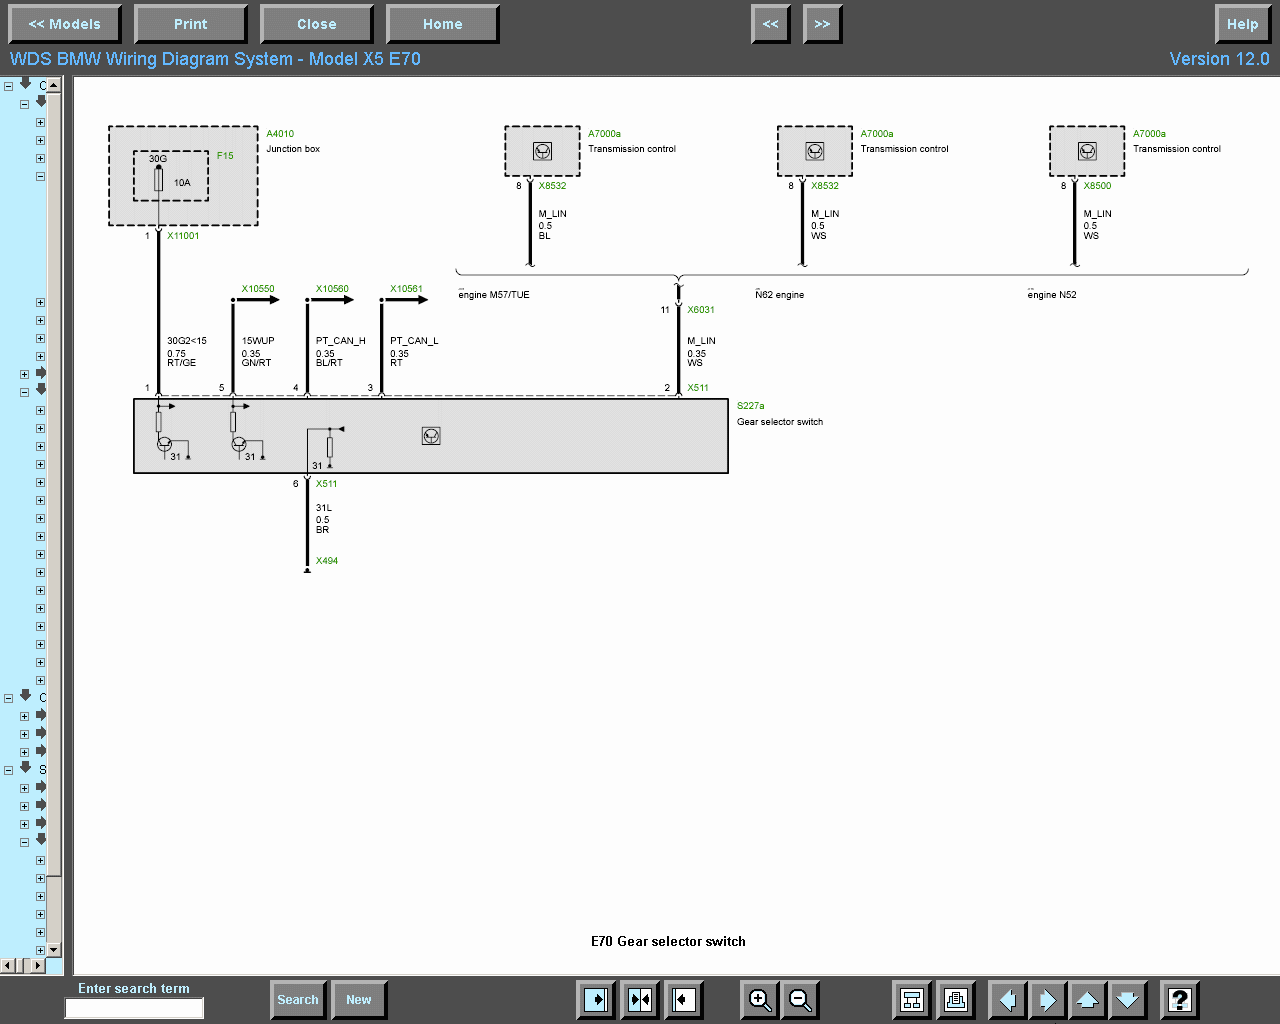 Bmw wds wiring diagram system 12.0 #6